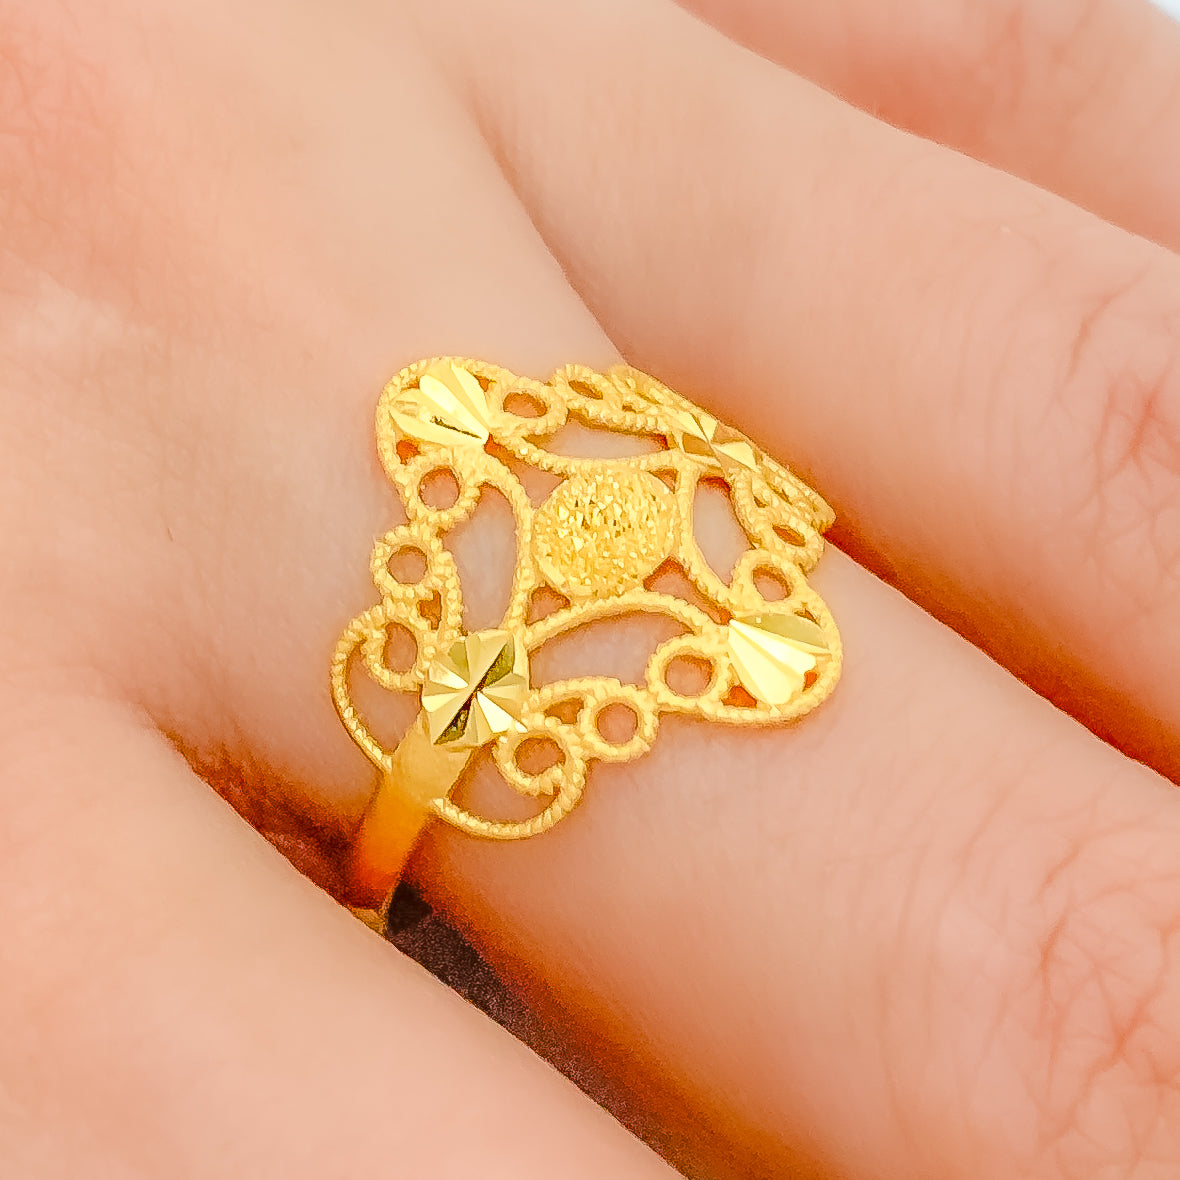 Buy quality gold antique oxidised round finger ring bracelet in Ahmedabad